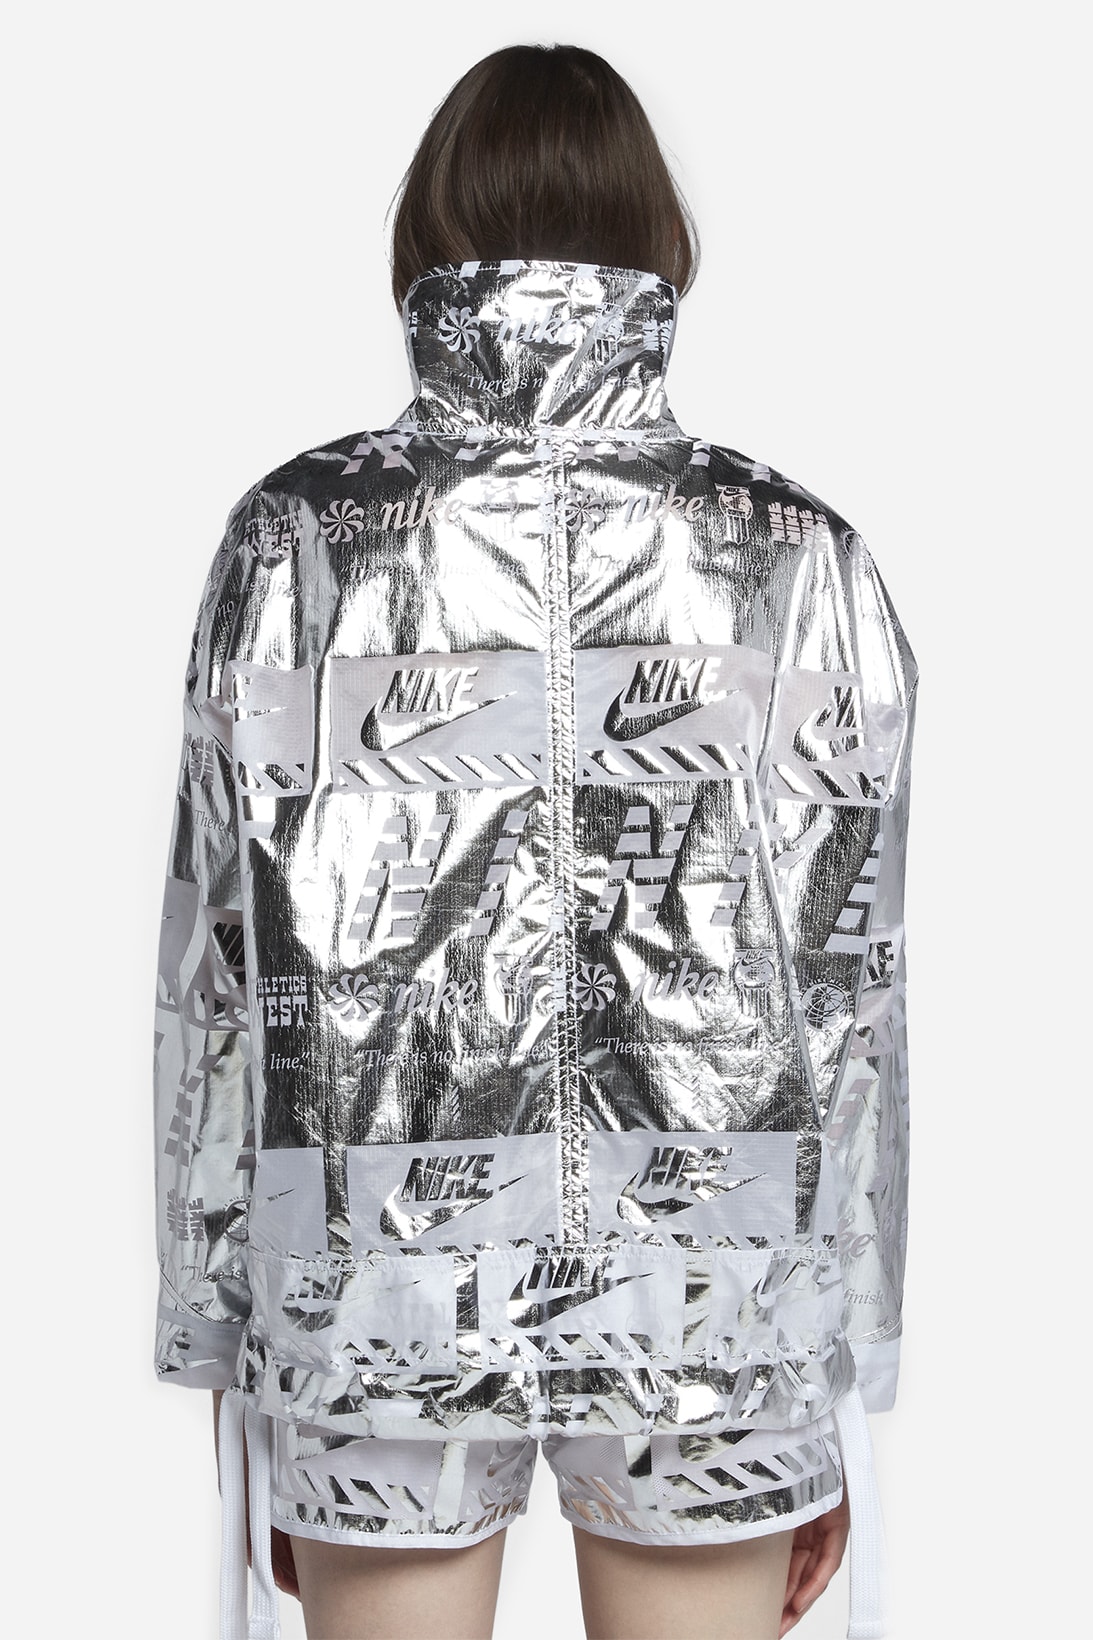 Nike Drops a Metallic Silver Graphic Logo Jacket | Hypebae